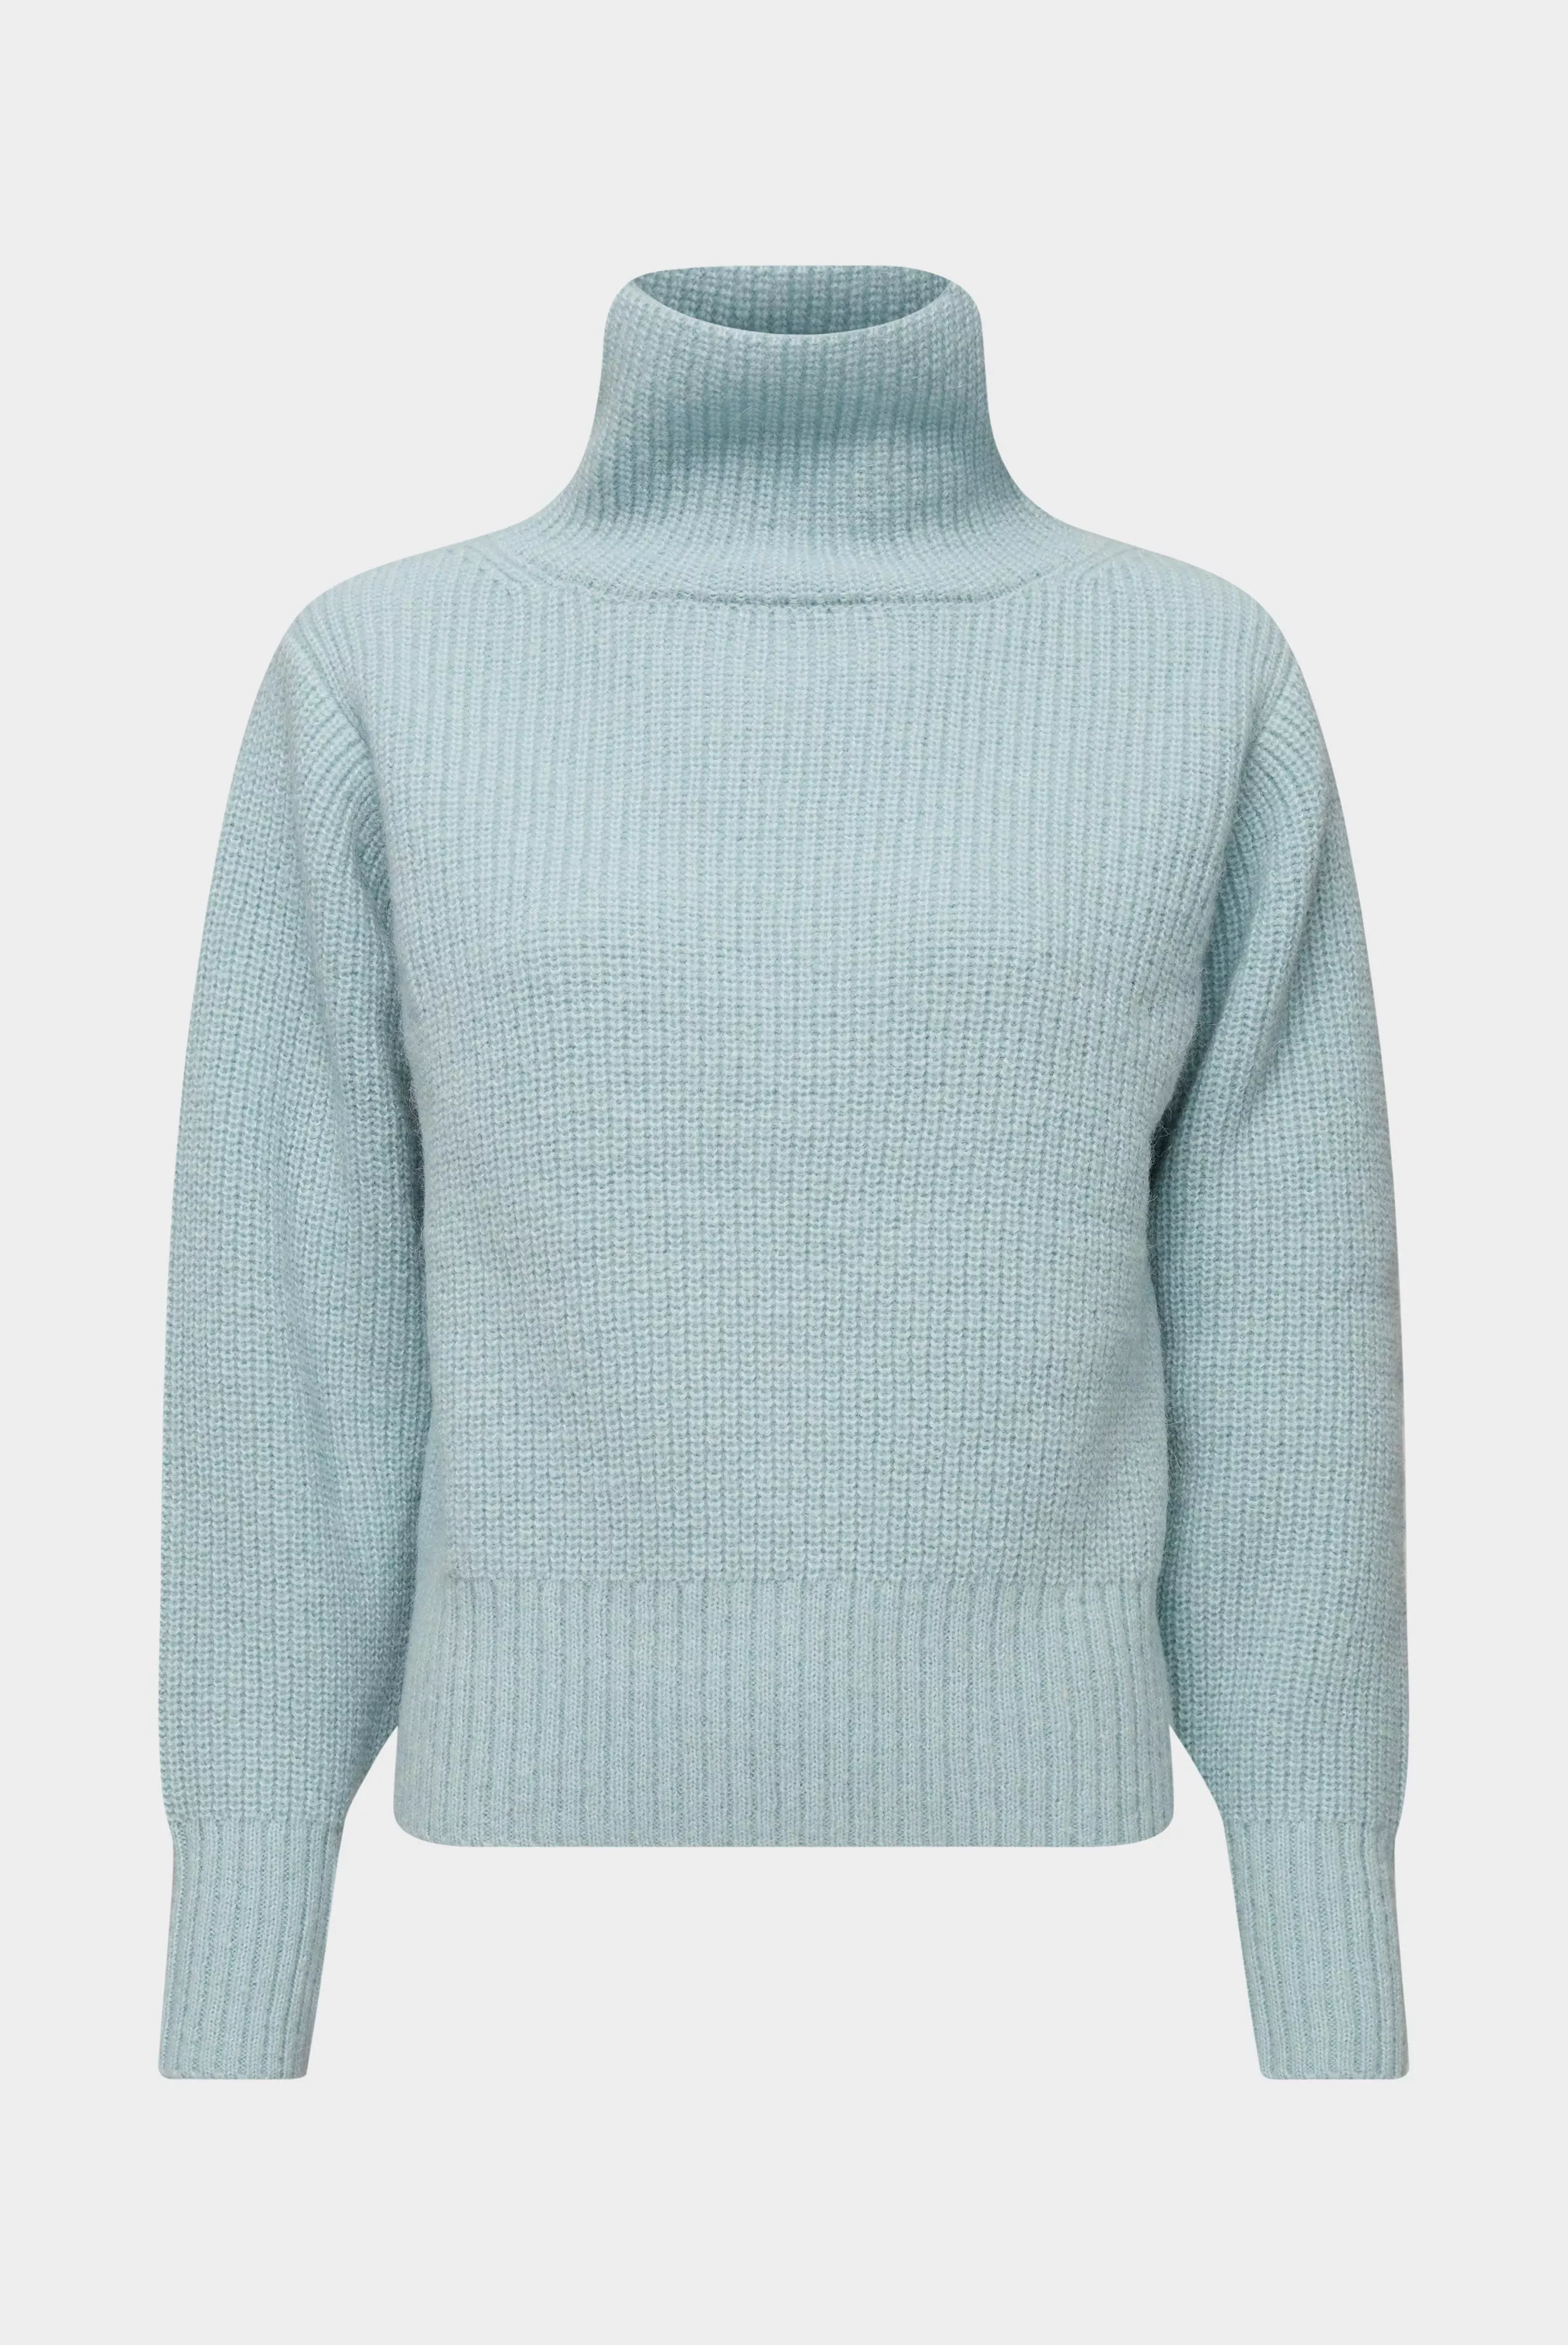 пуловер SELENAS голубой SELENAS_S00232_710 ,photo 2